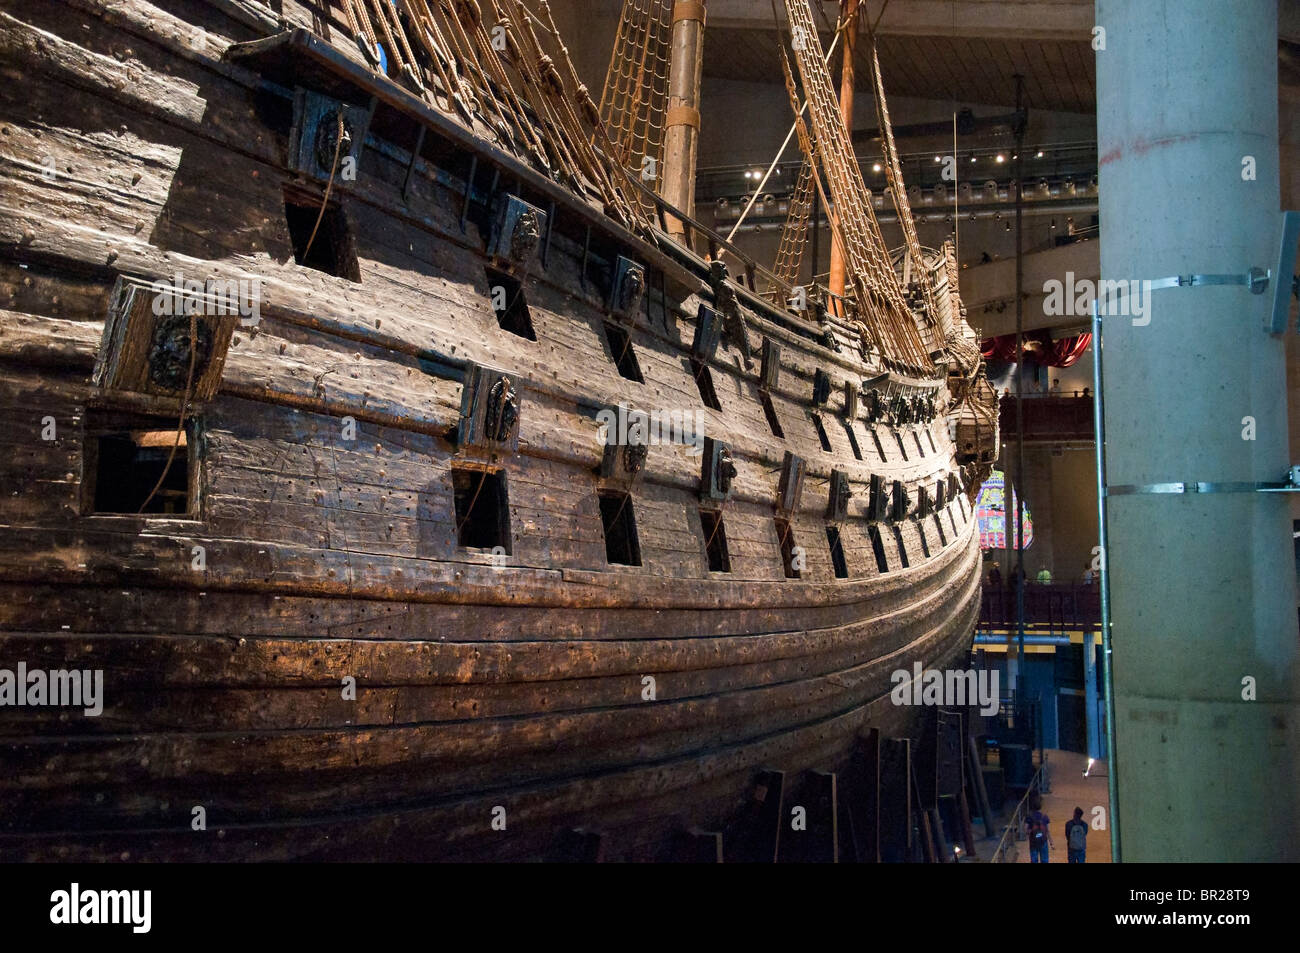 The Vasa Swedish Warship in the Vasamuseet (Vasa Museum) in Stockholm, Sweden. Stock Photo